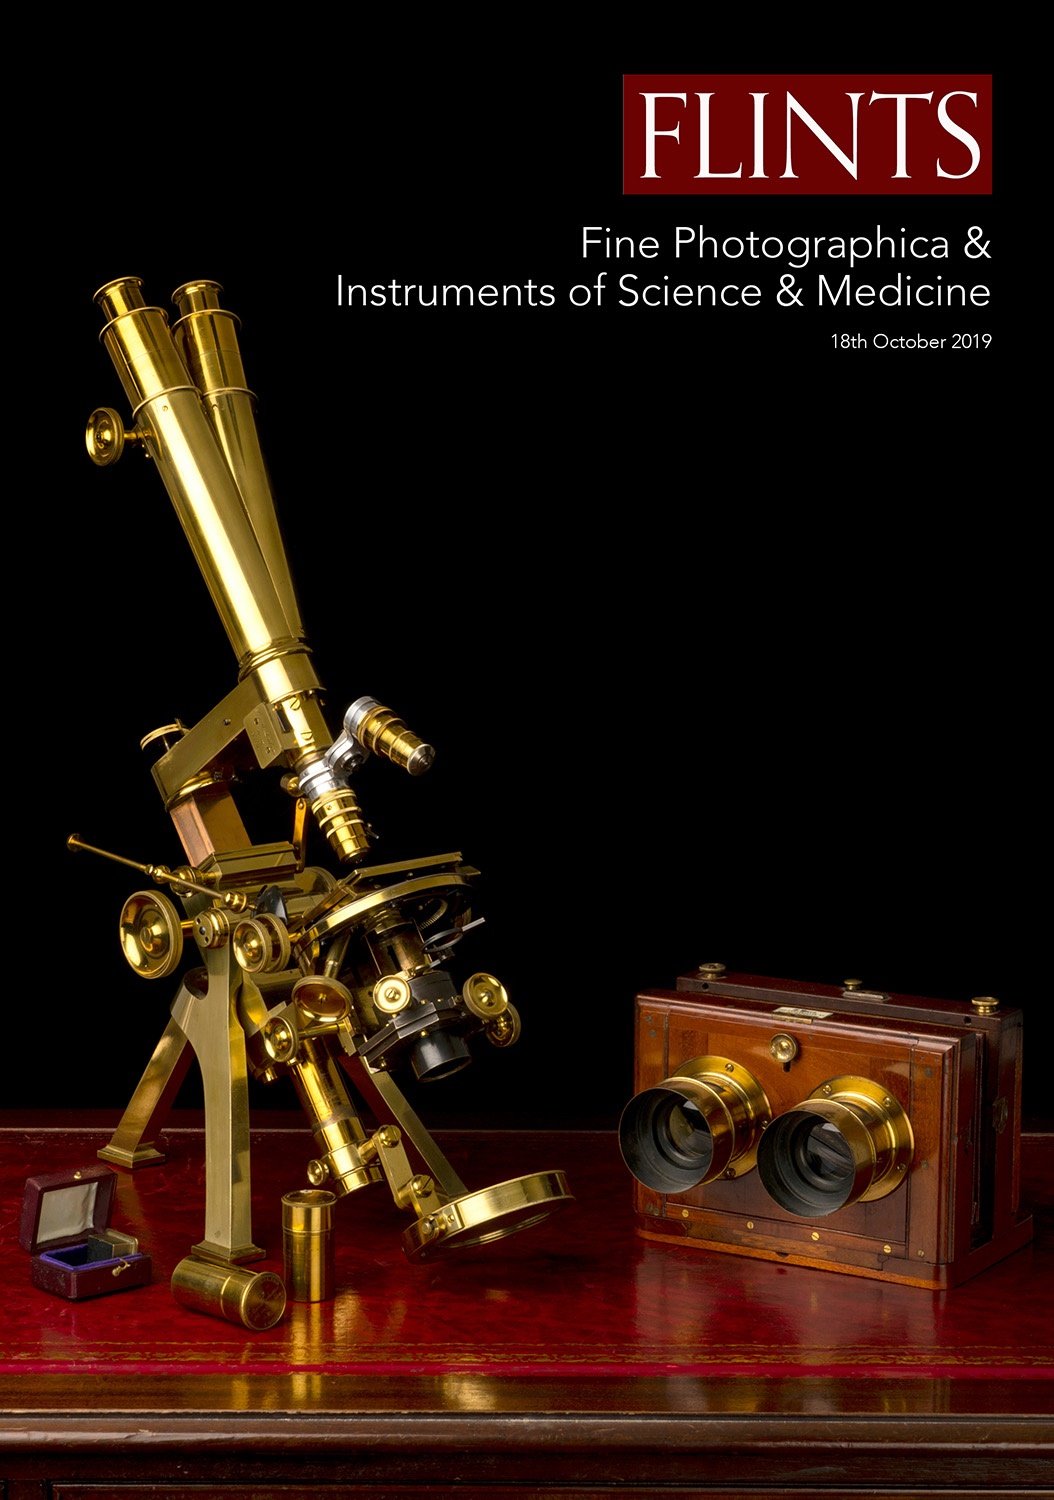 Fine Photographica & Instruments of Science & Medicine